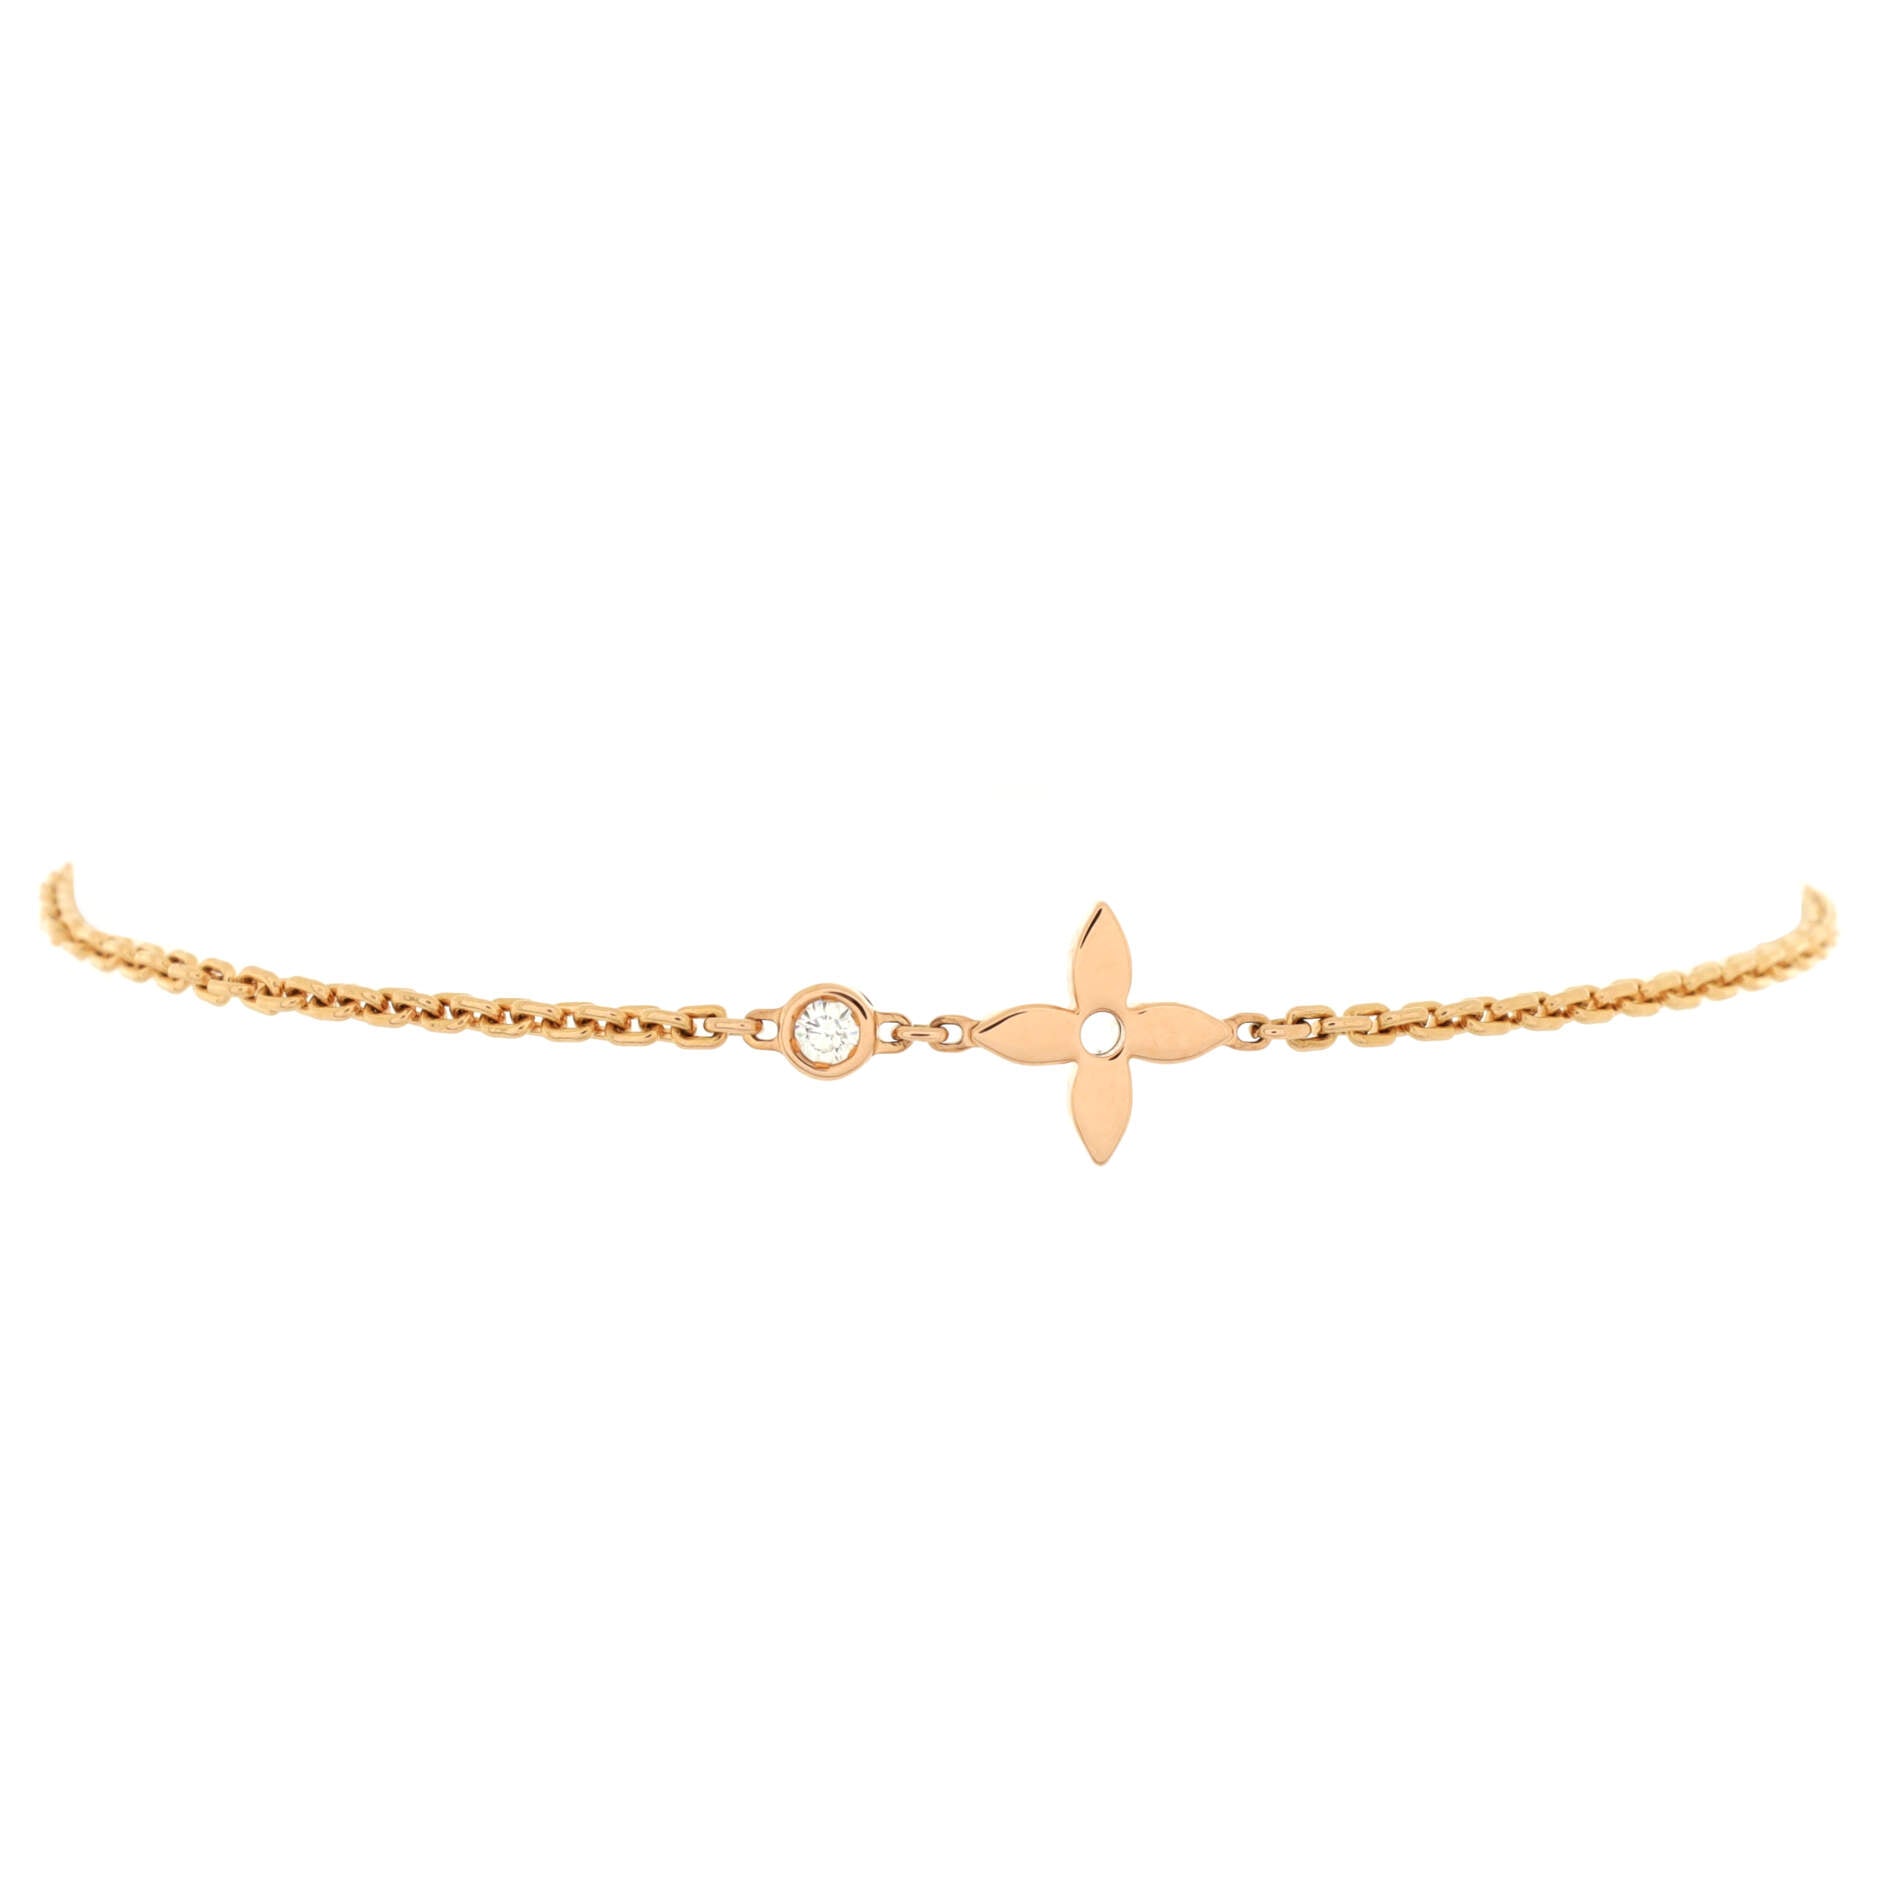 Louis Vuitton Pre-owned Women's Rose Gold Bracelet - Pink - S